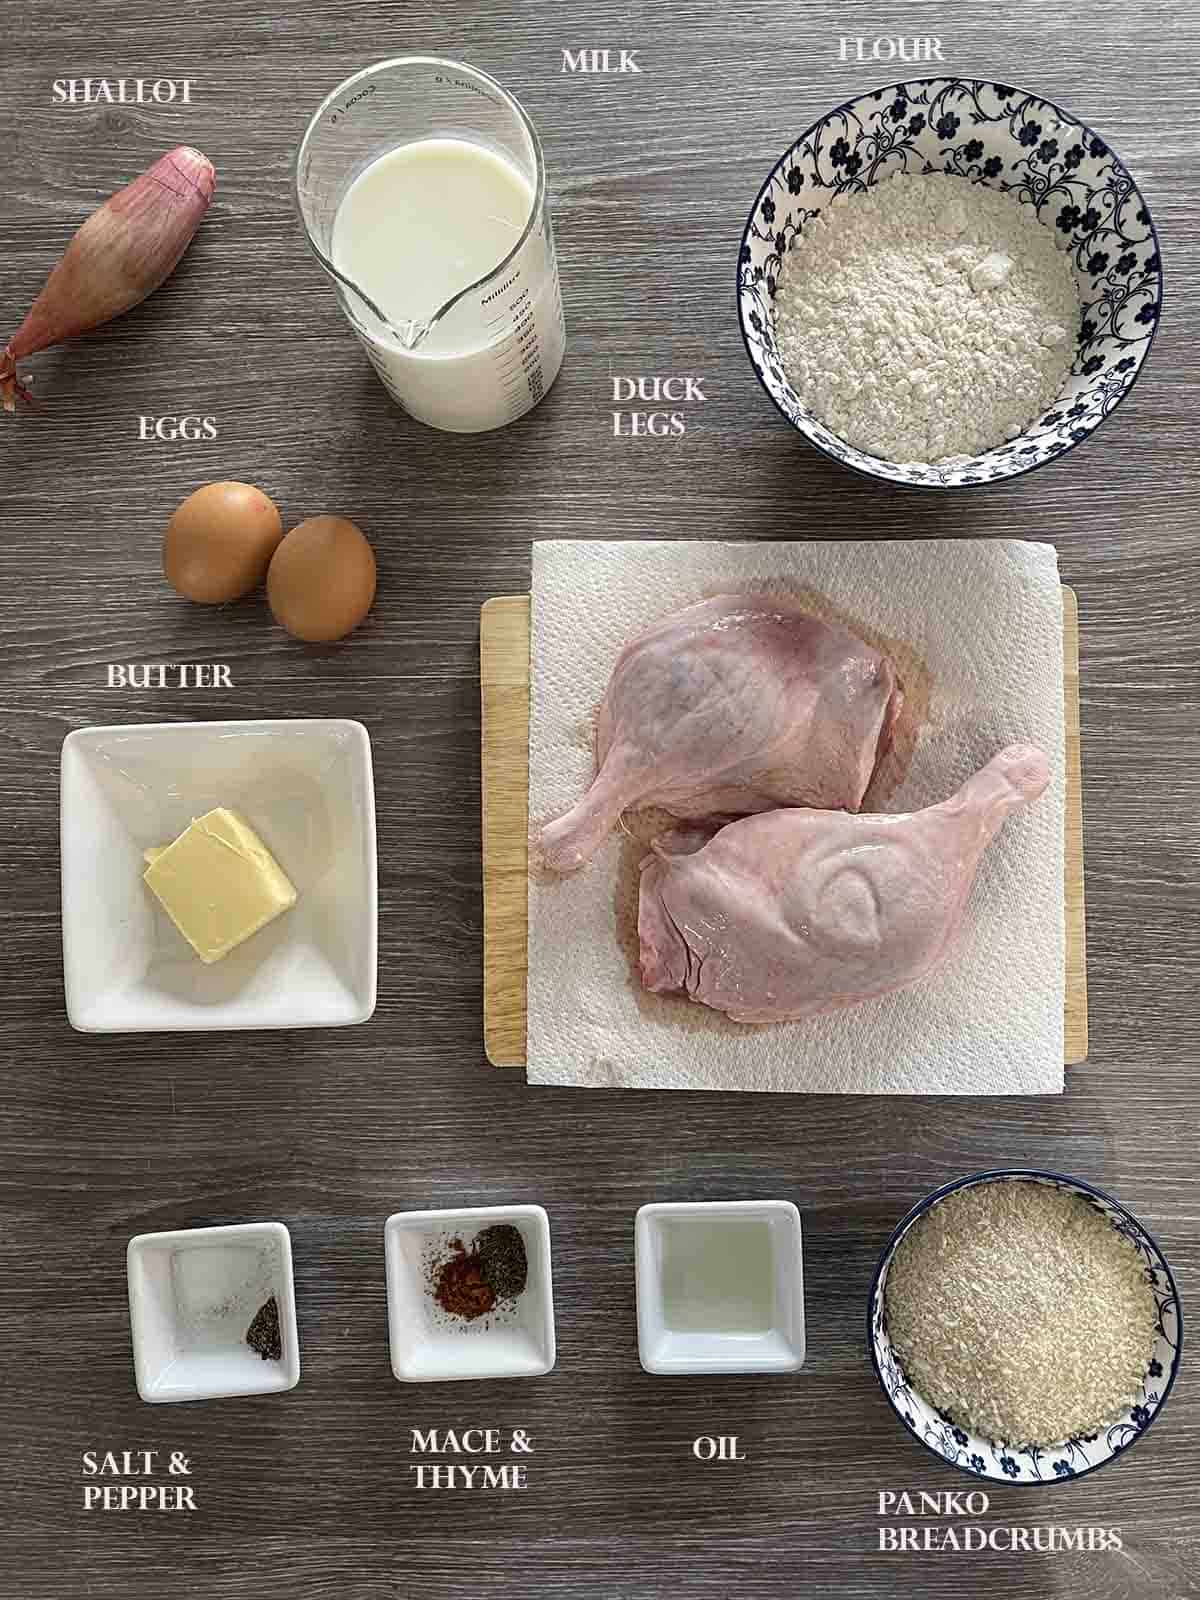 ingredients including duck leggs, egg, milk, butter and breadcrumbs.